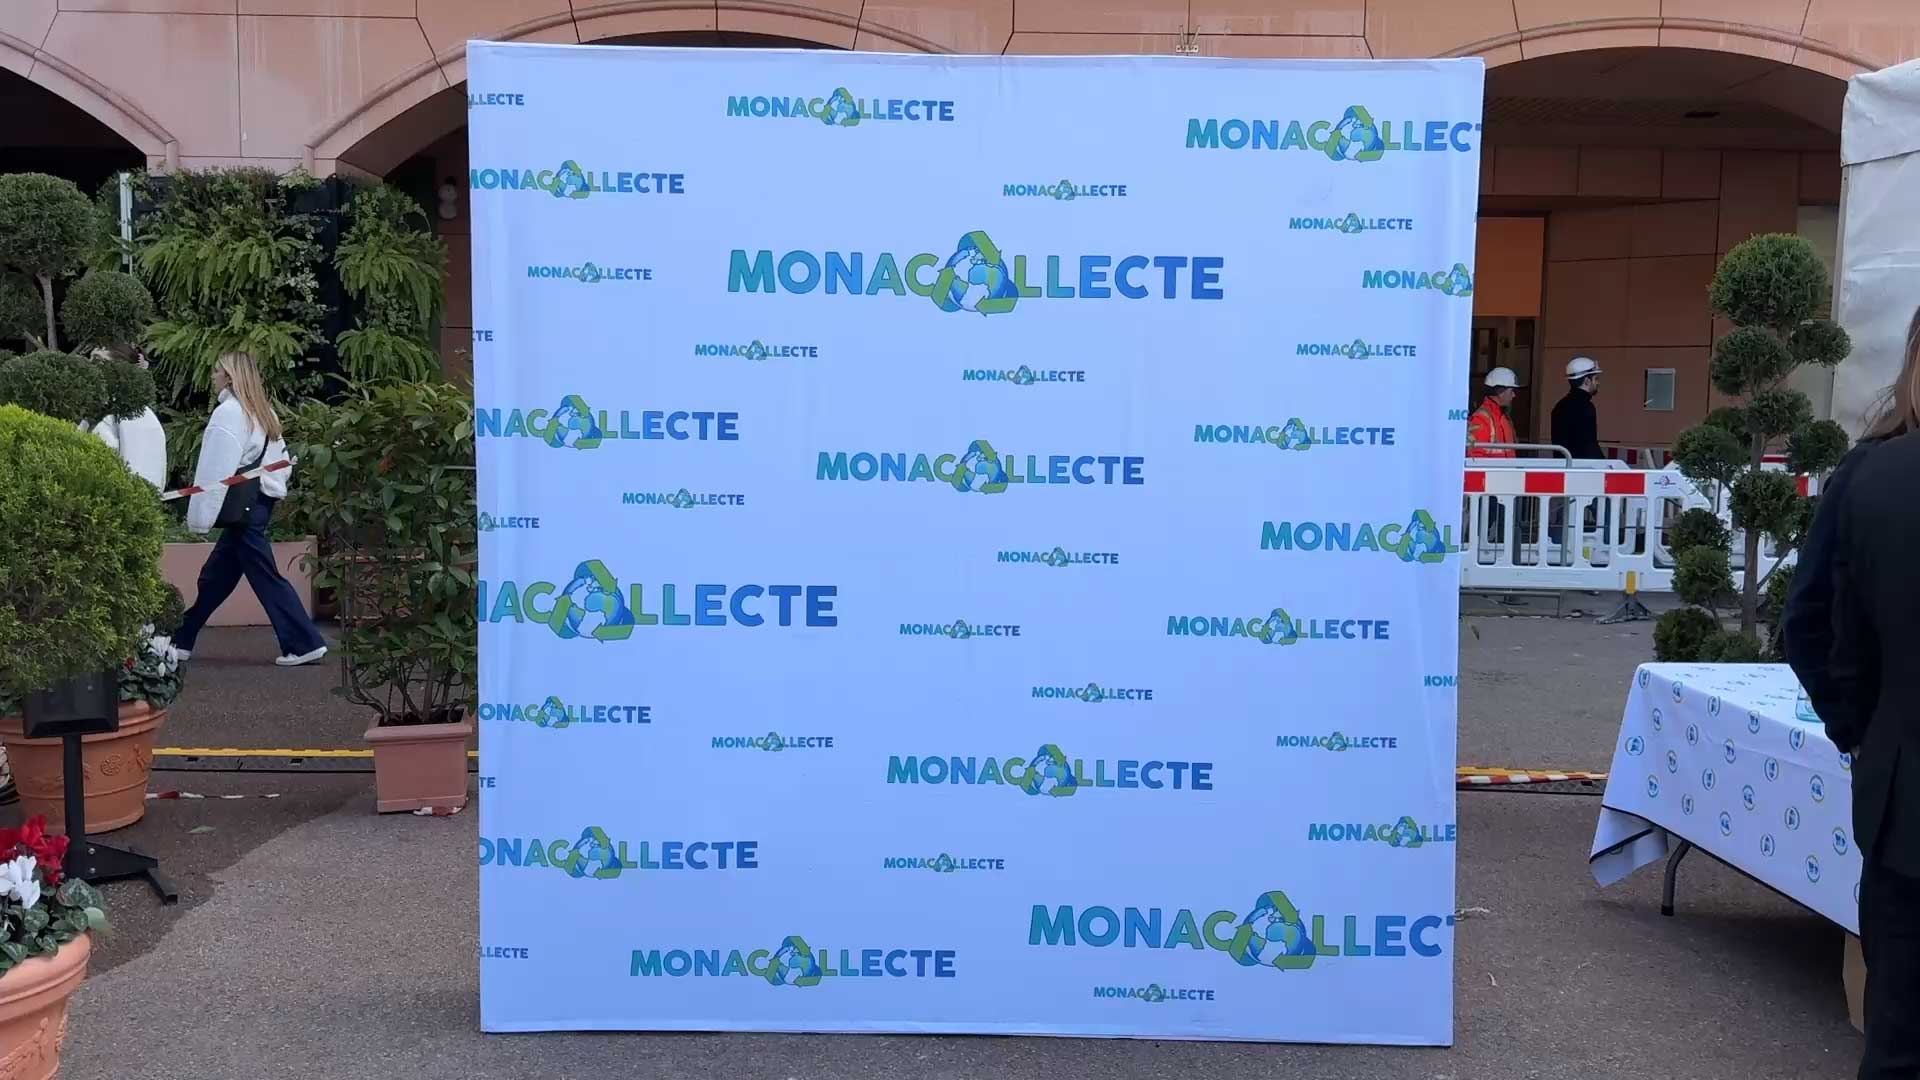 Monacollecte Tv